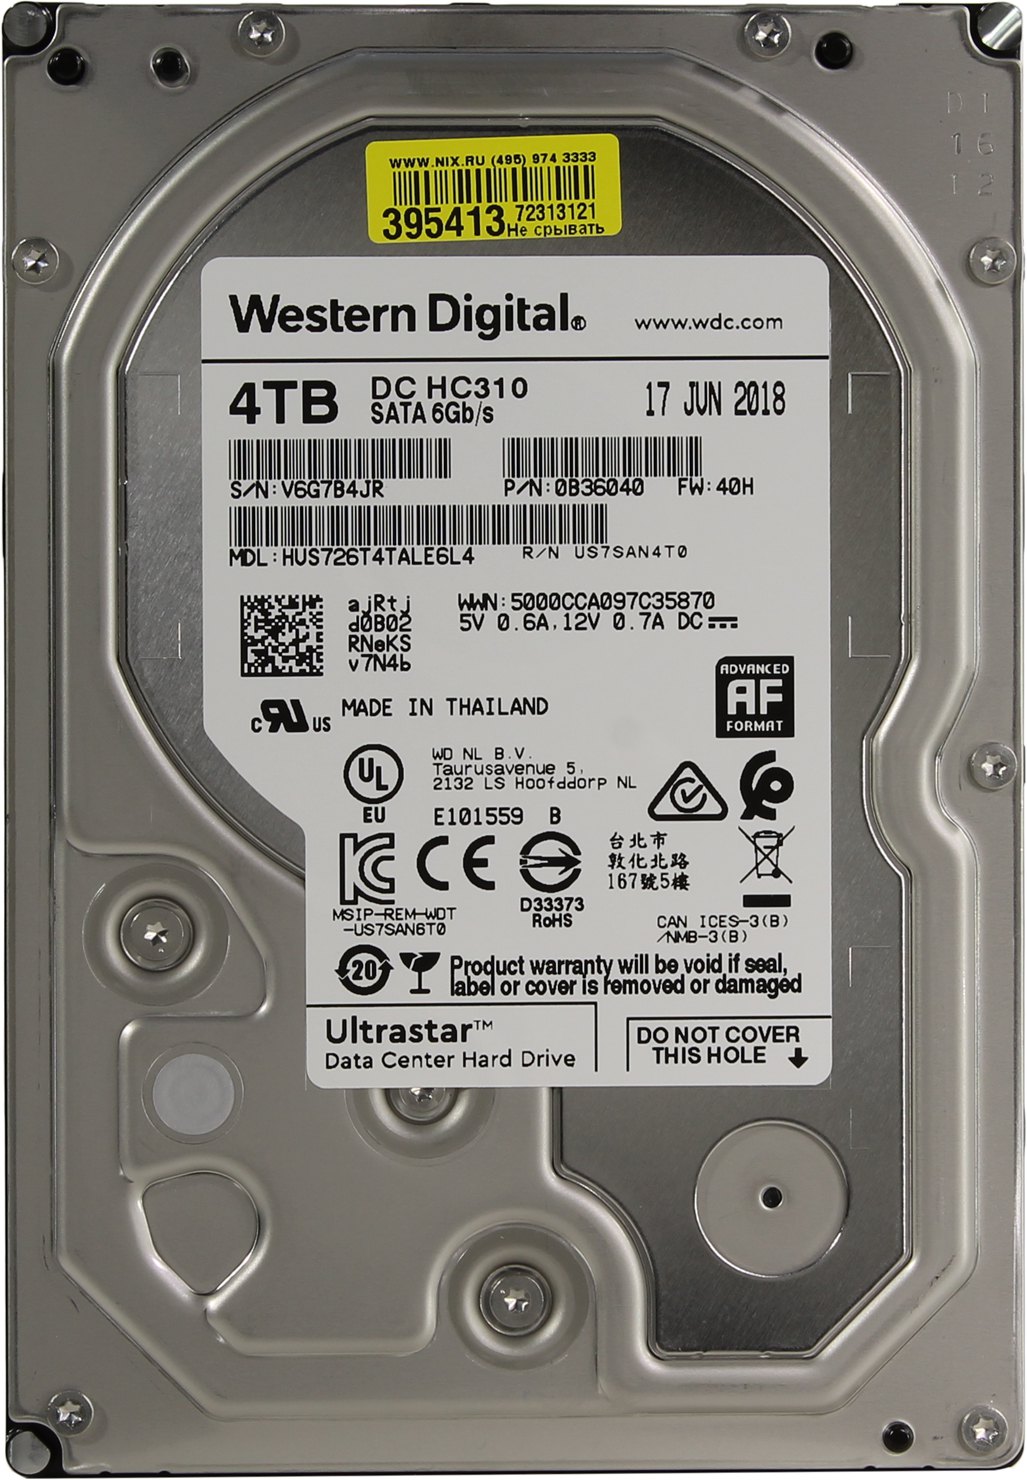 Жесткий диск Western Digital 3.5" 4TB Ultrastar DC HC310 [HUS726T4TALE6L4] SATA 6Gb/s, 7200rpm, 256MB, 0B36040, 512e, Bulk